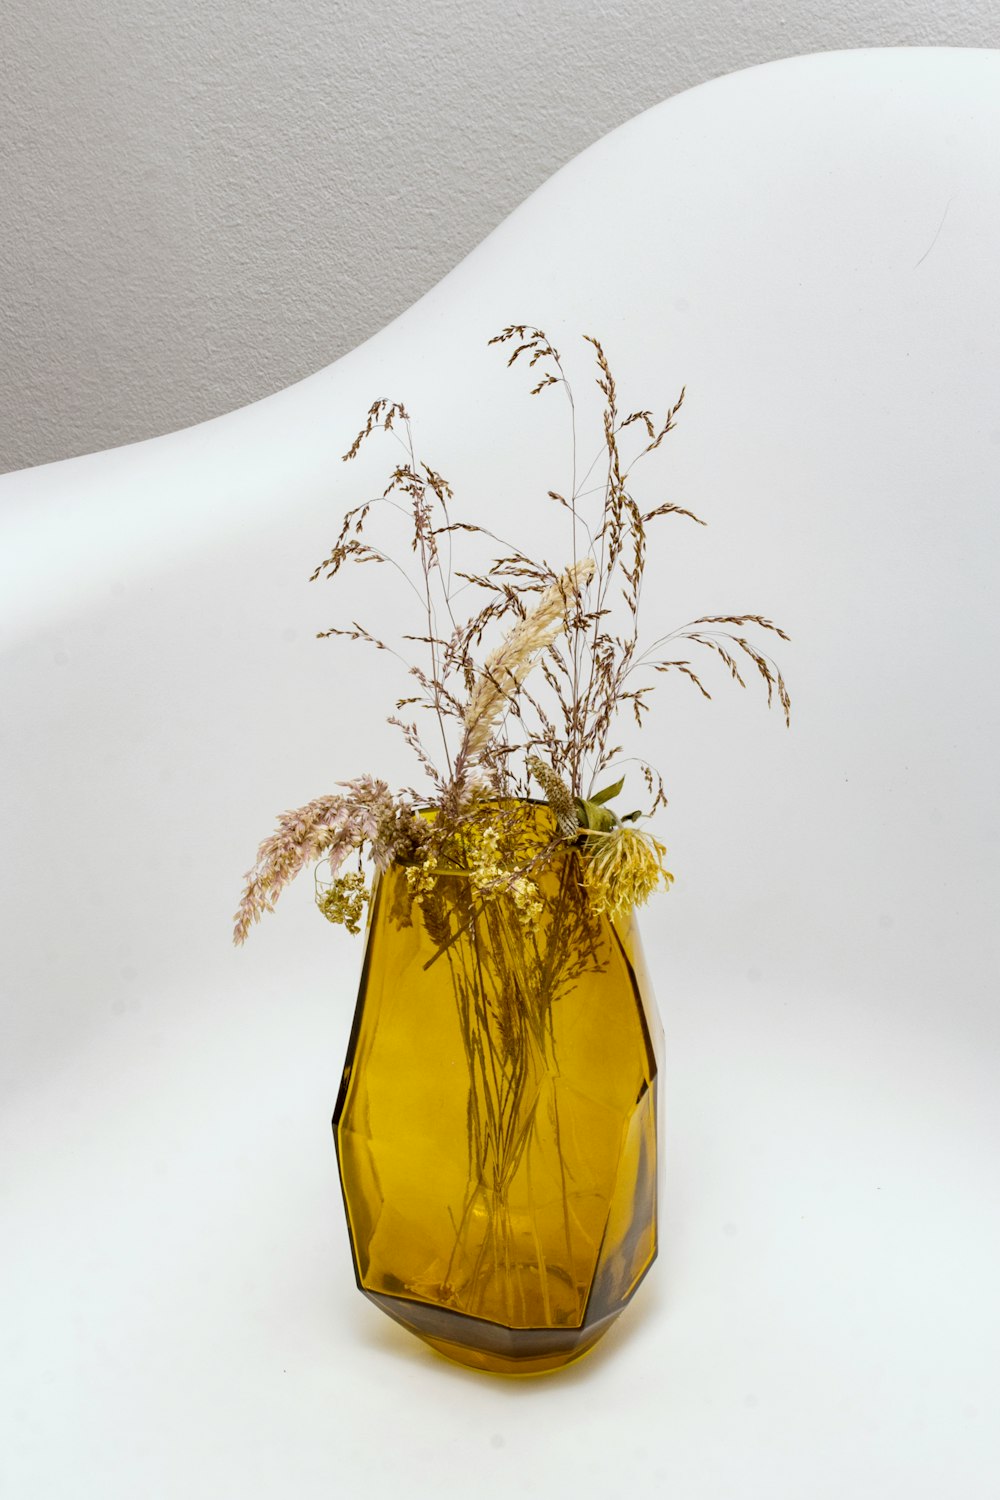 grasses in yellow translucent glass vase